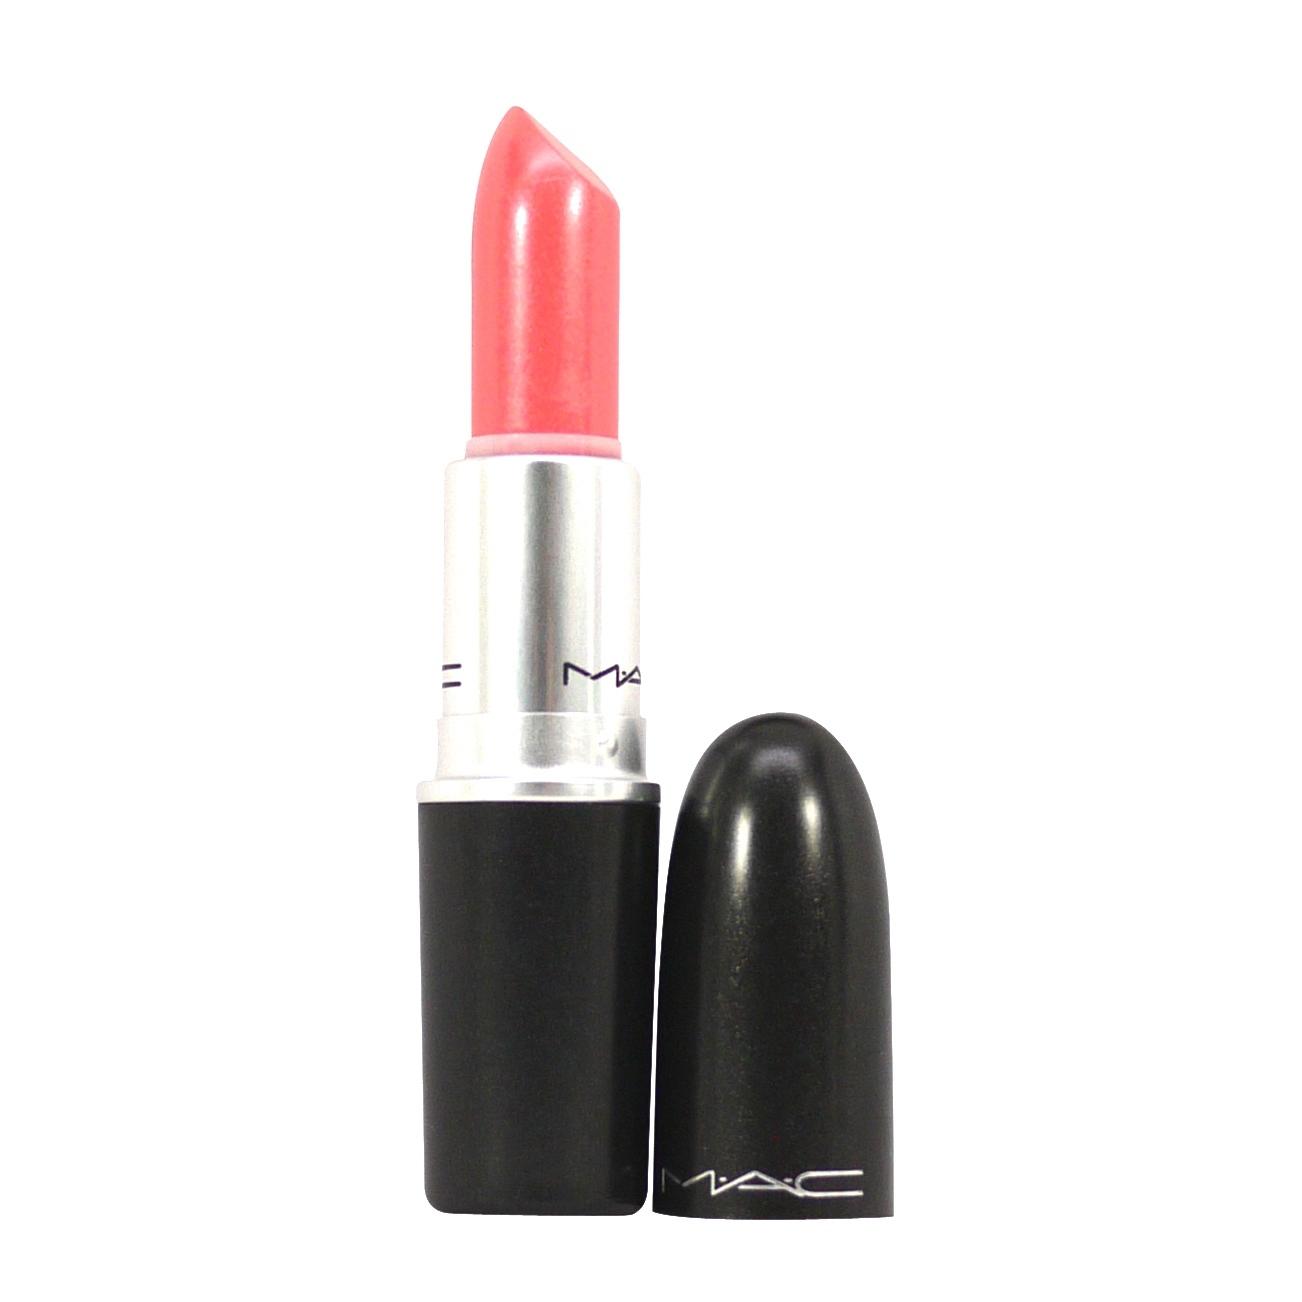 Uitgelezene MAC Lipstick Peach Blossom | Glambot.com - Best deals on MAC DK-72